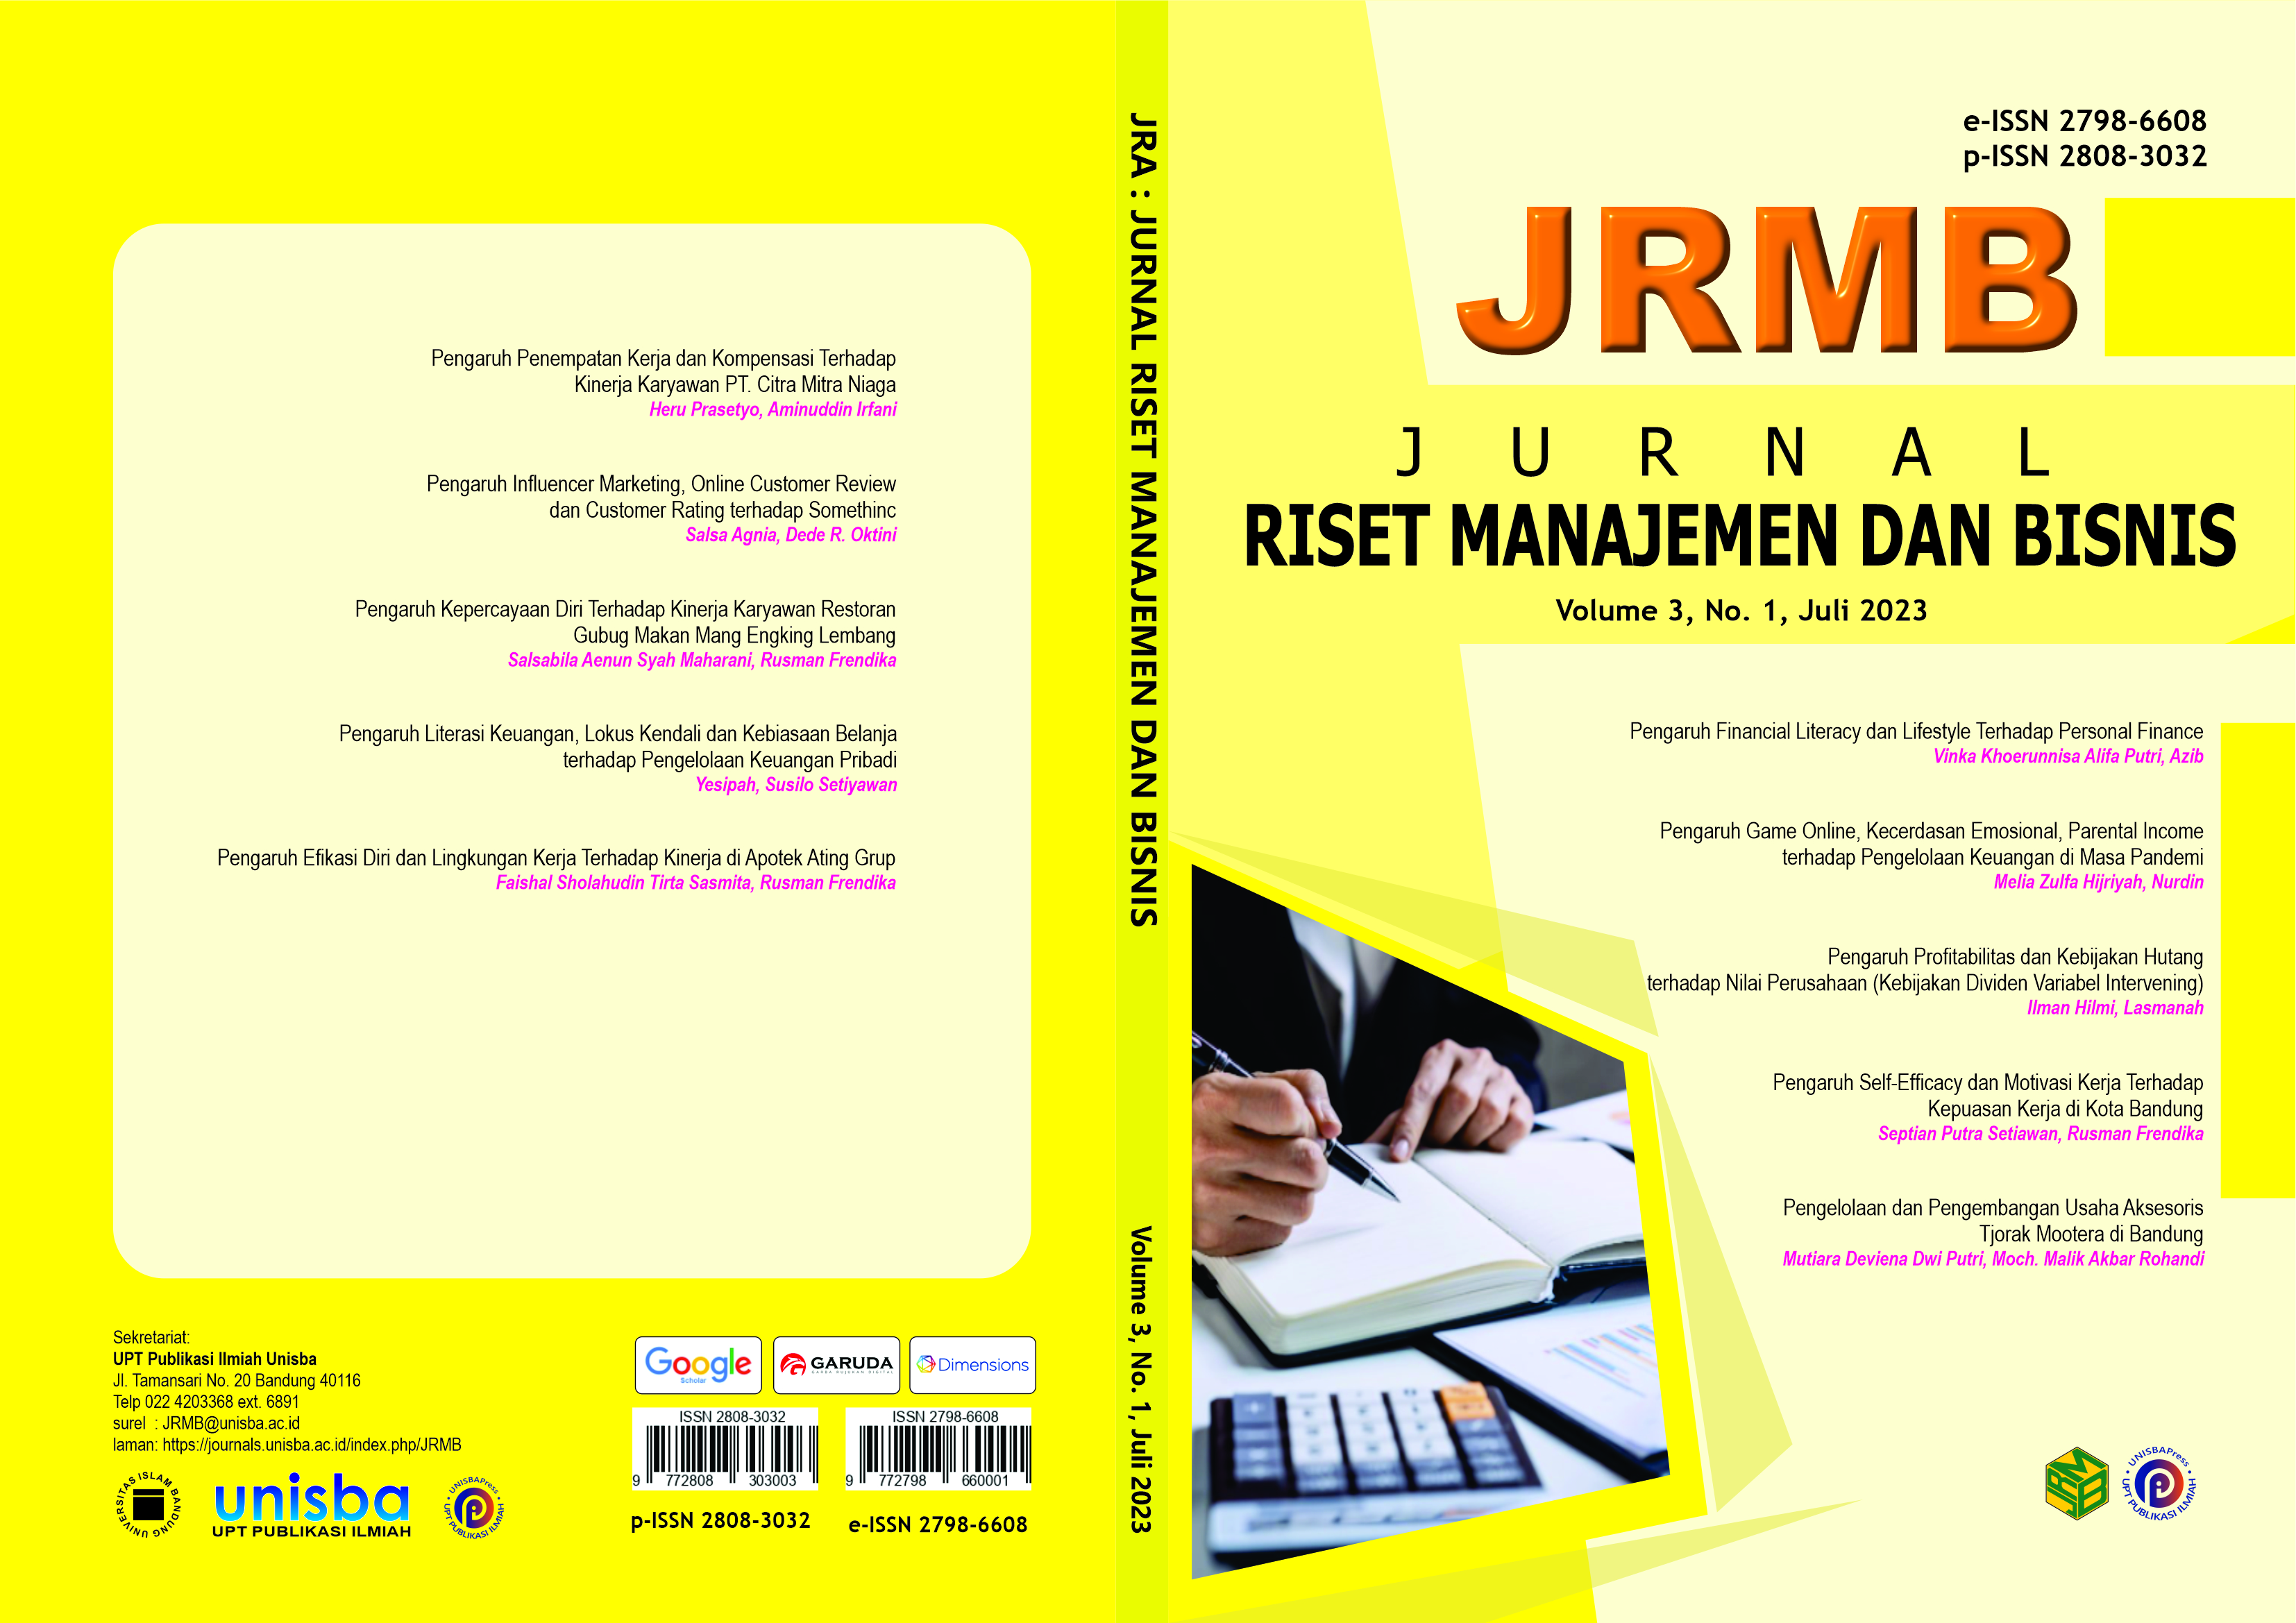 					View Volume 3, No. 1, Juli 2023 Jurnal Riset Manajemen dan Bisnis (JRMB)
				